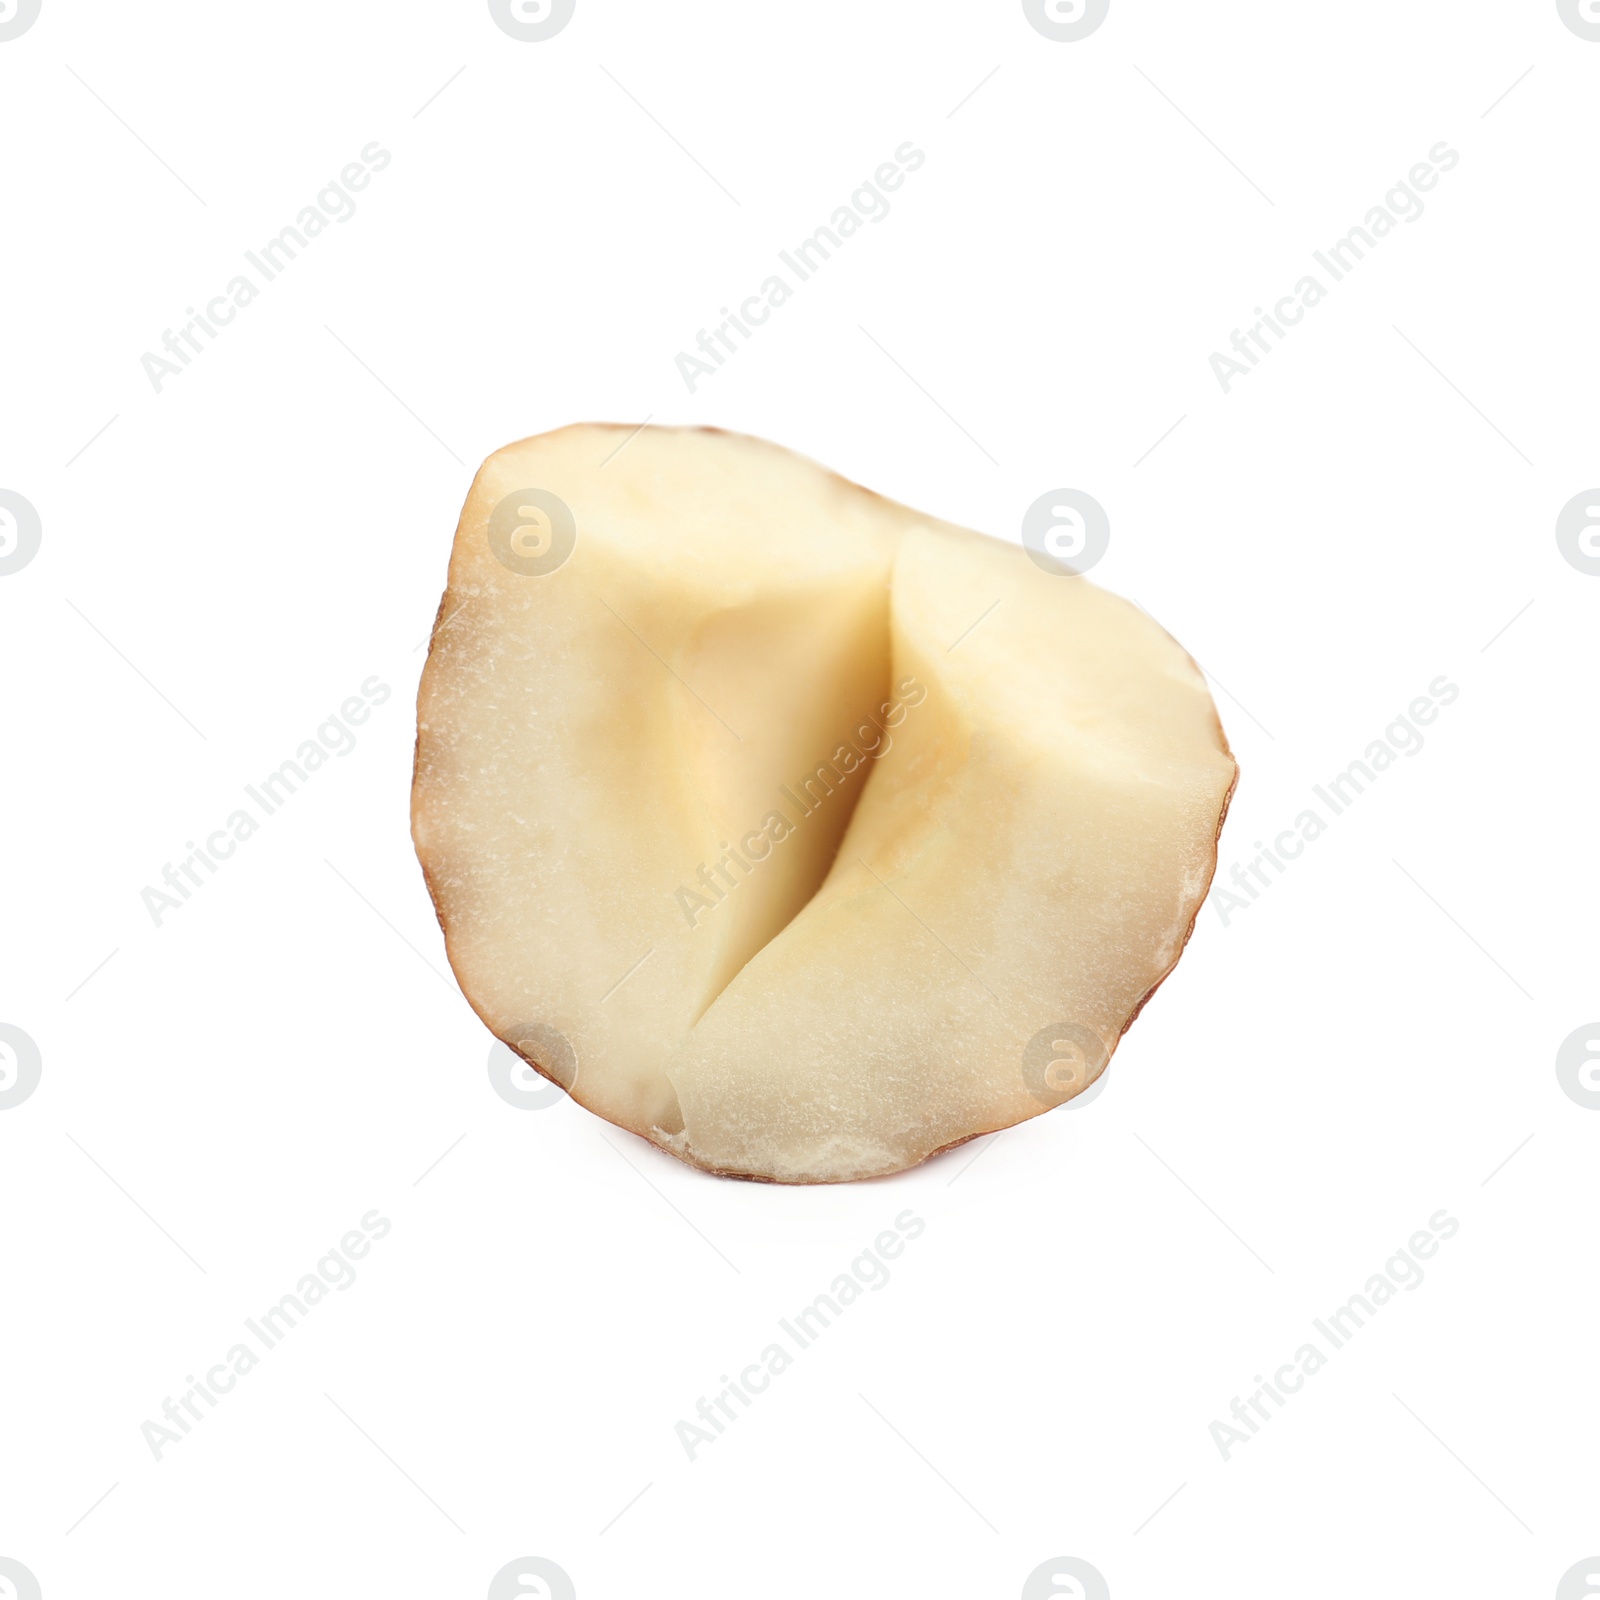 Photo of Piece of tasty organic hazelnut on white background